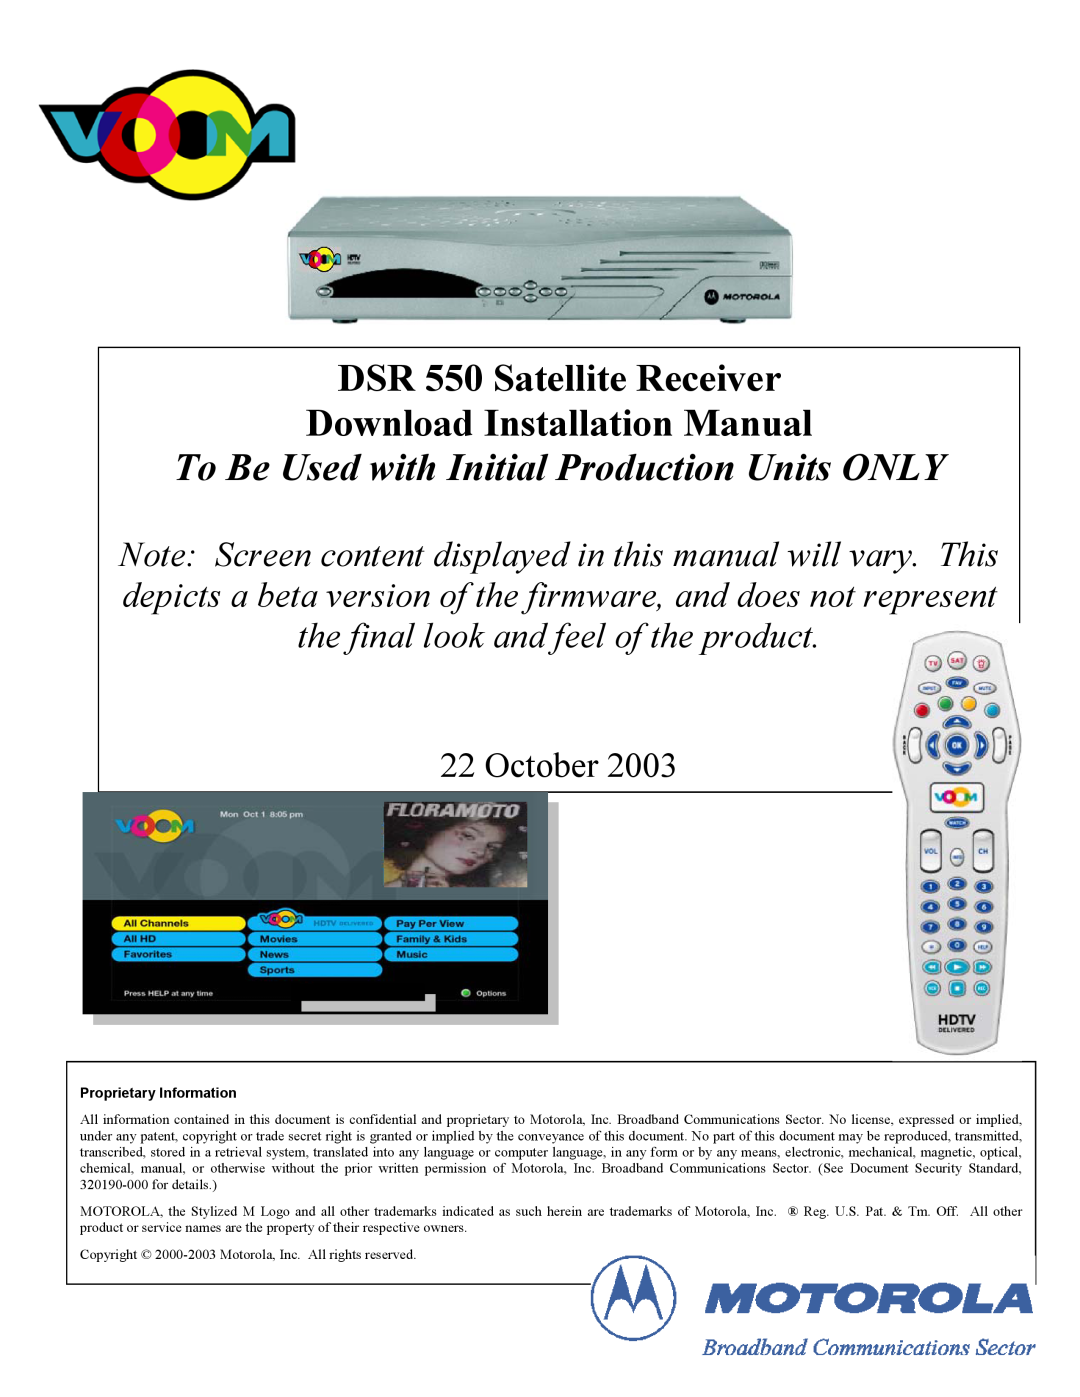 Motorola installation manual DSR 550 Satellite Receiver Download Installation Manual, October, Proprietary Information 